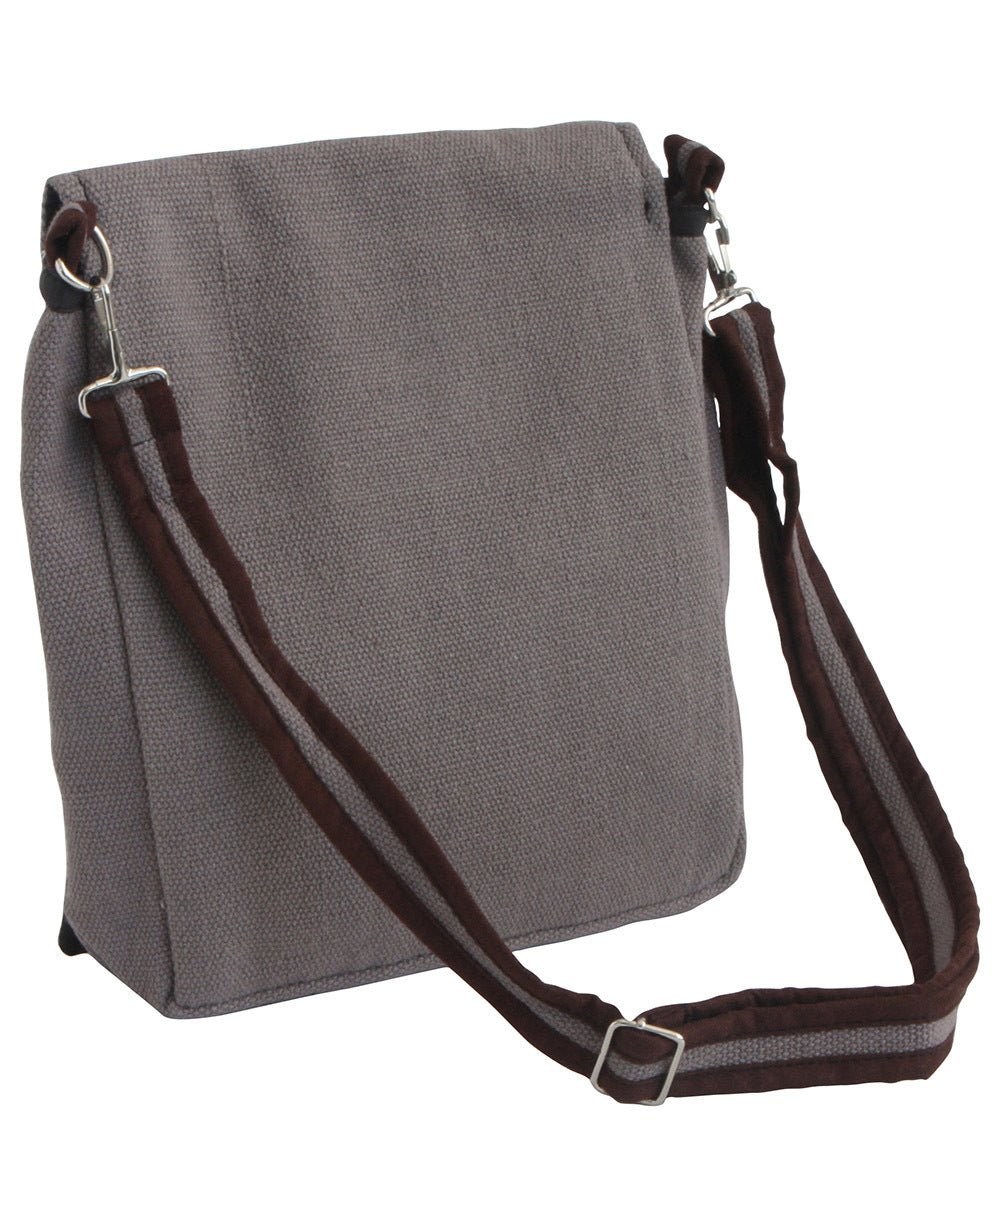 Om Messenger Cross Body Bag - Handbags Grey